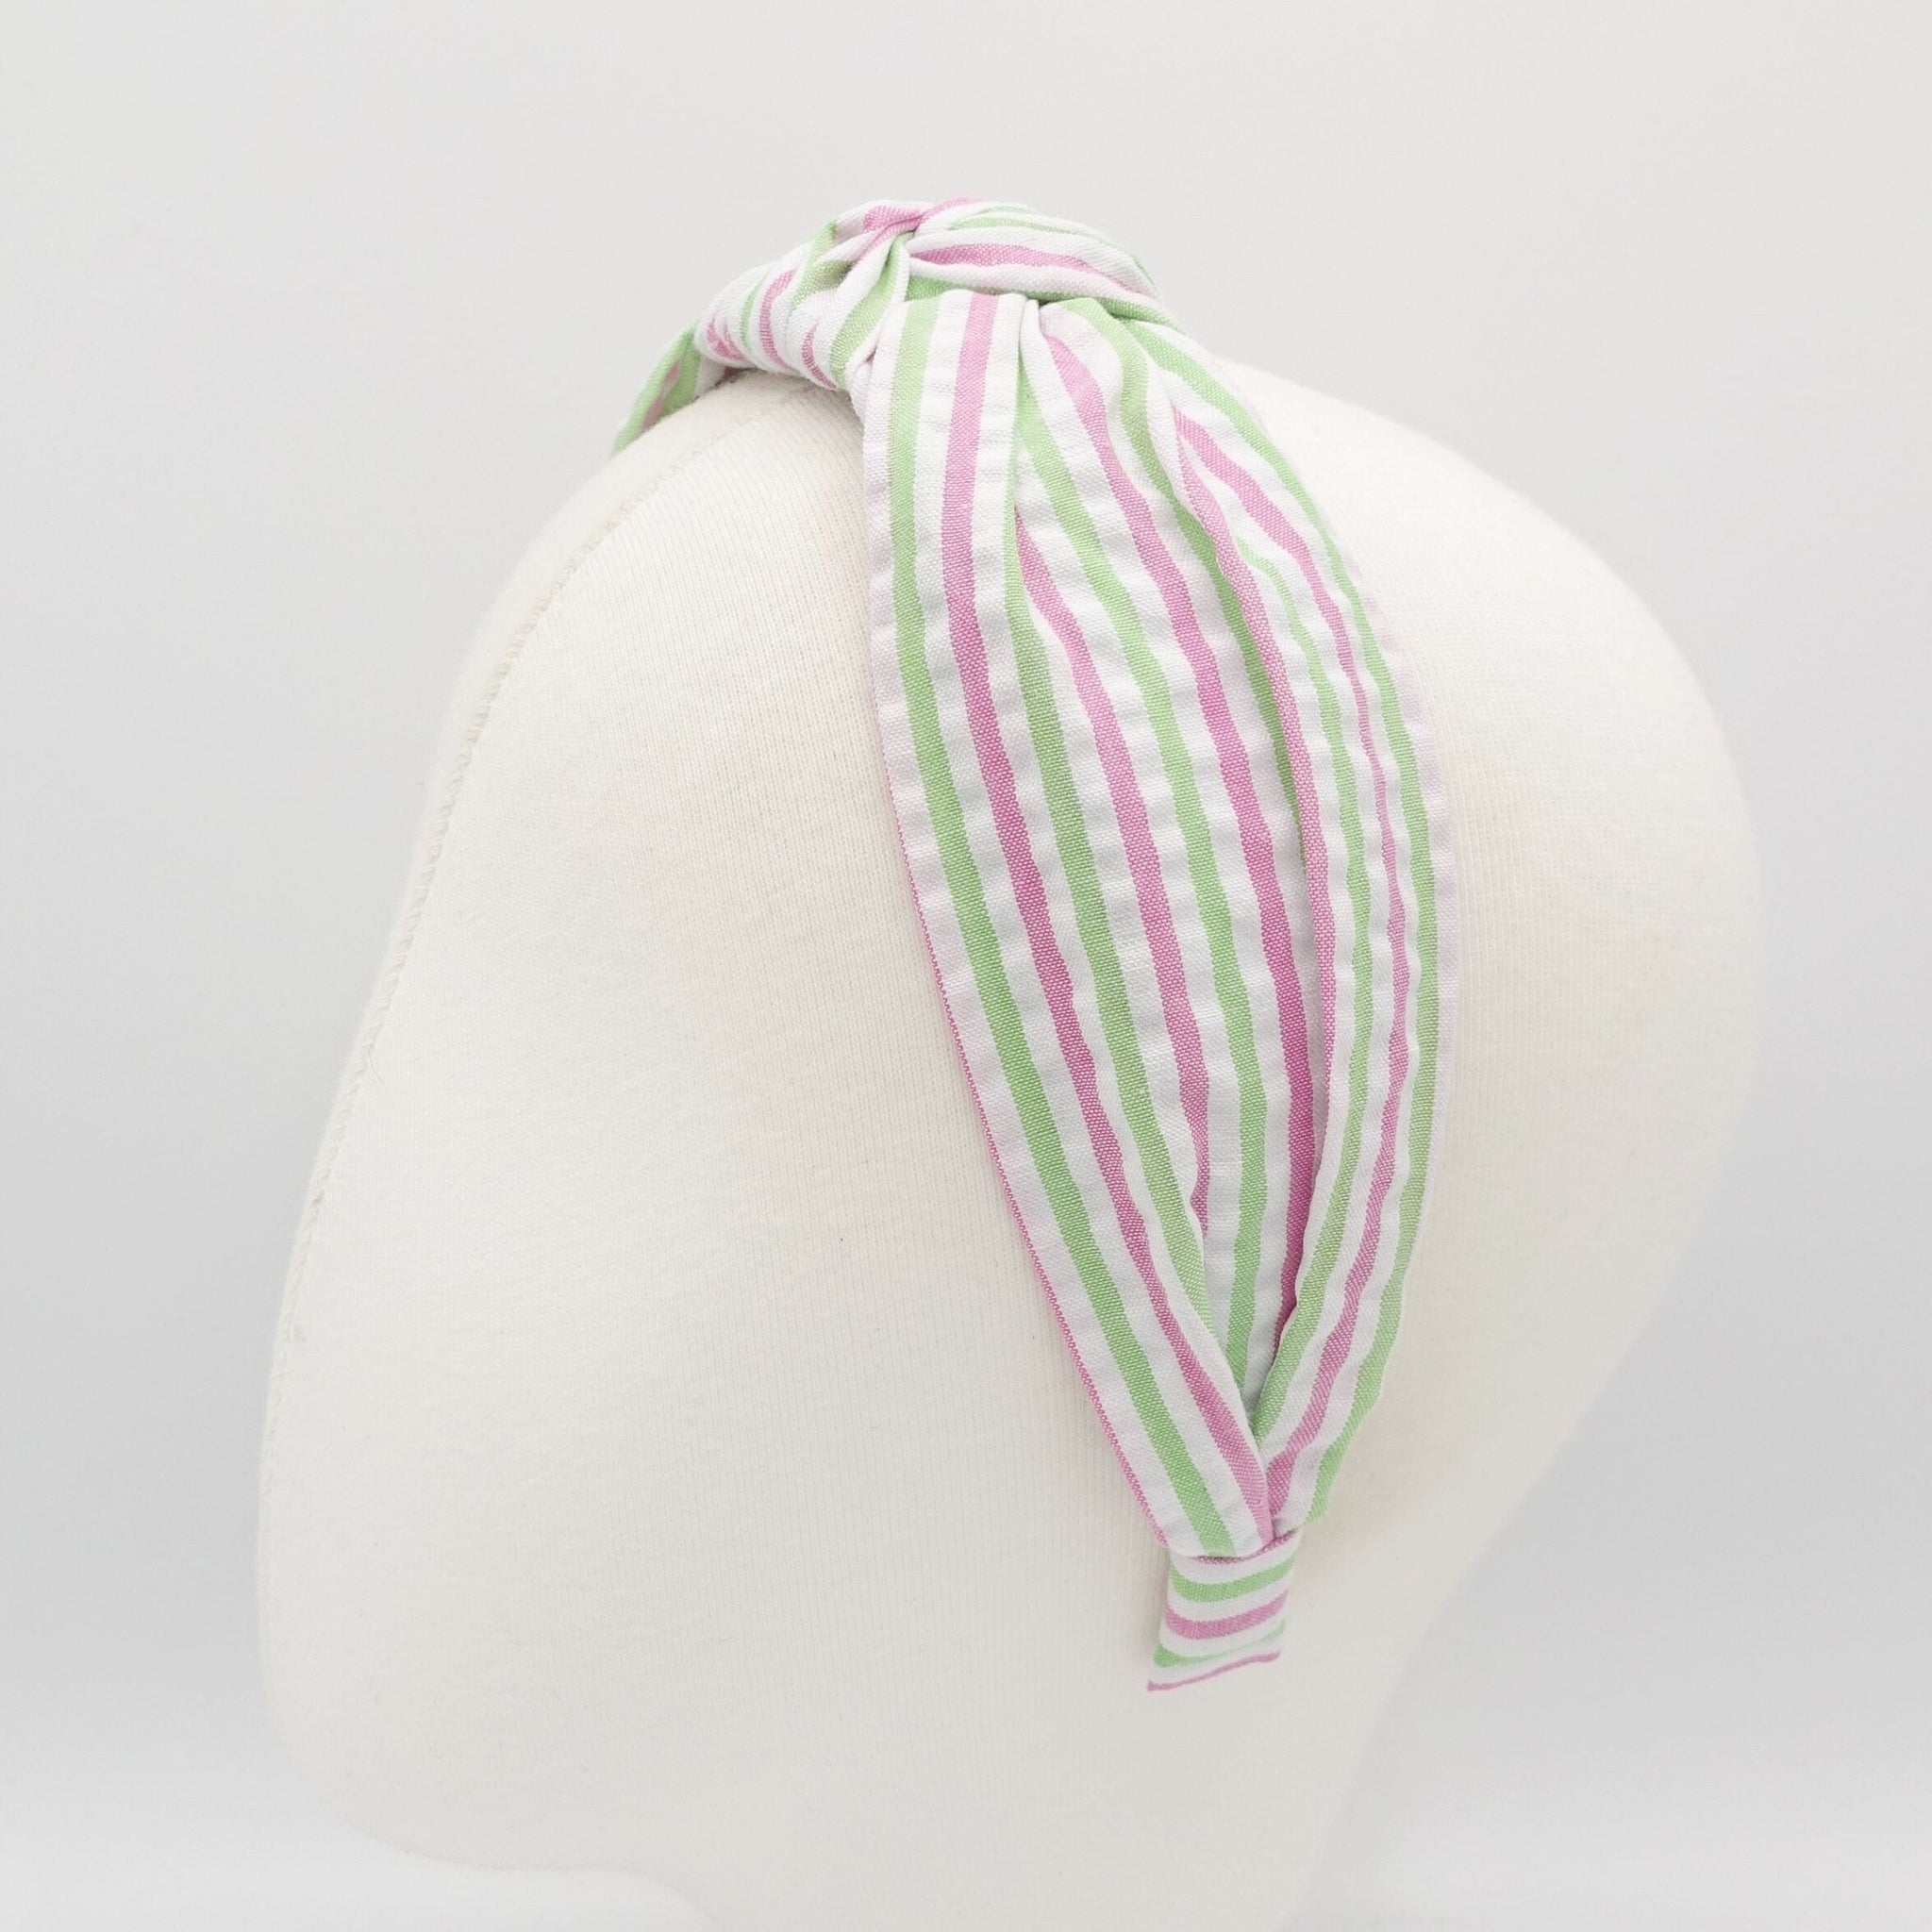 veryshine.com Headband Violet stripe top knot headband cotton crinkled hairband casual hair accessory for women